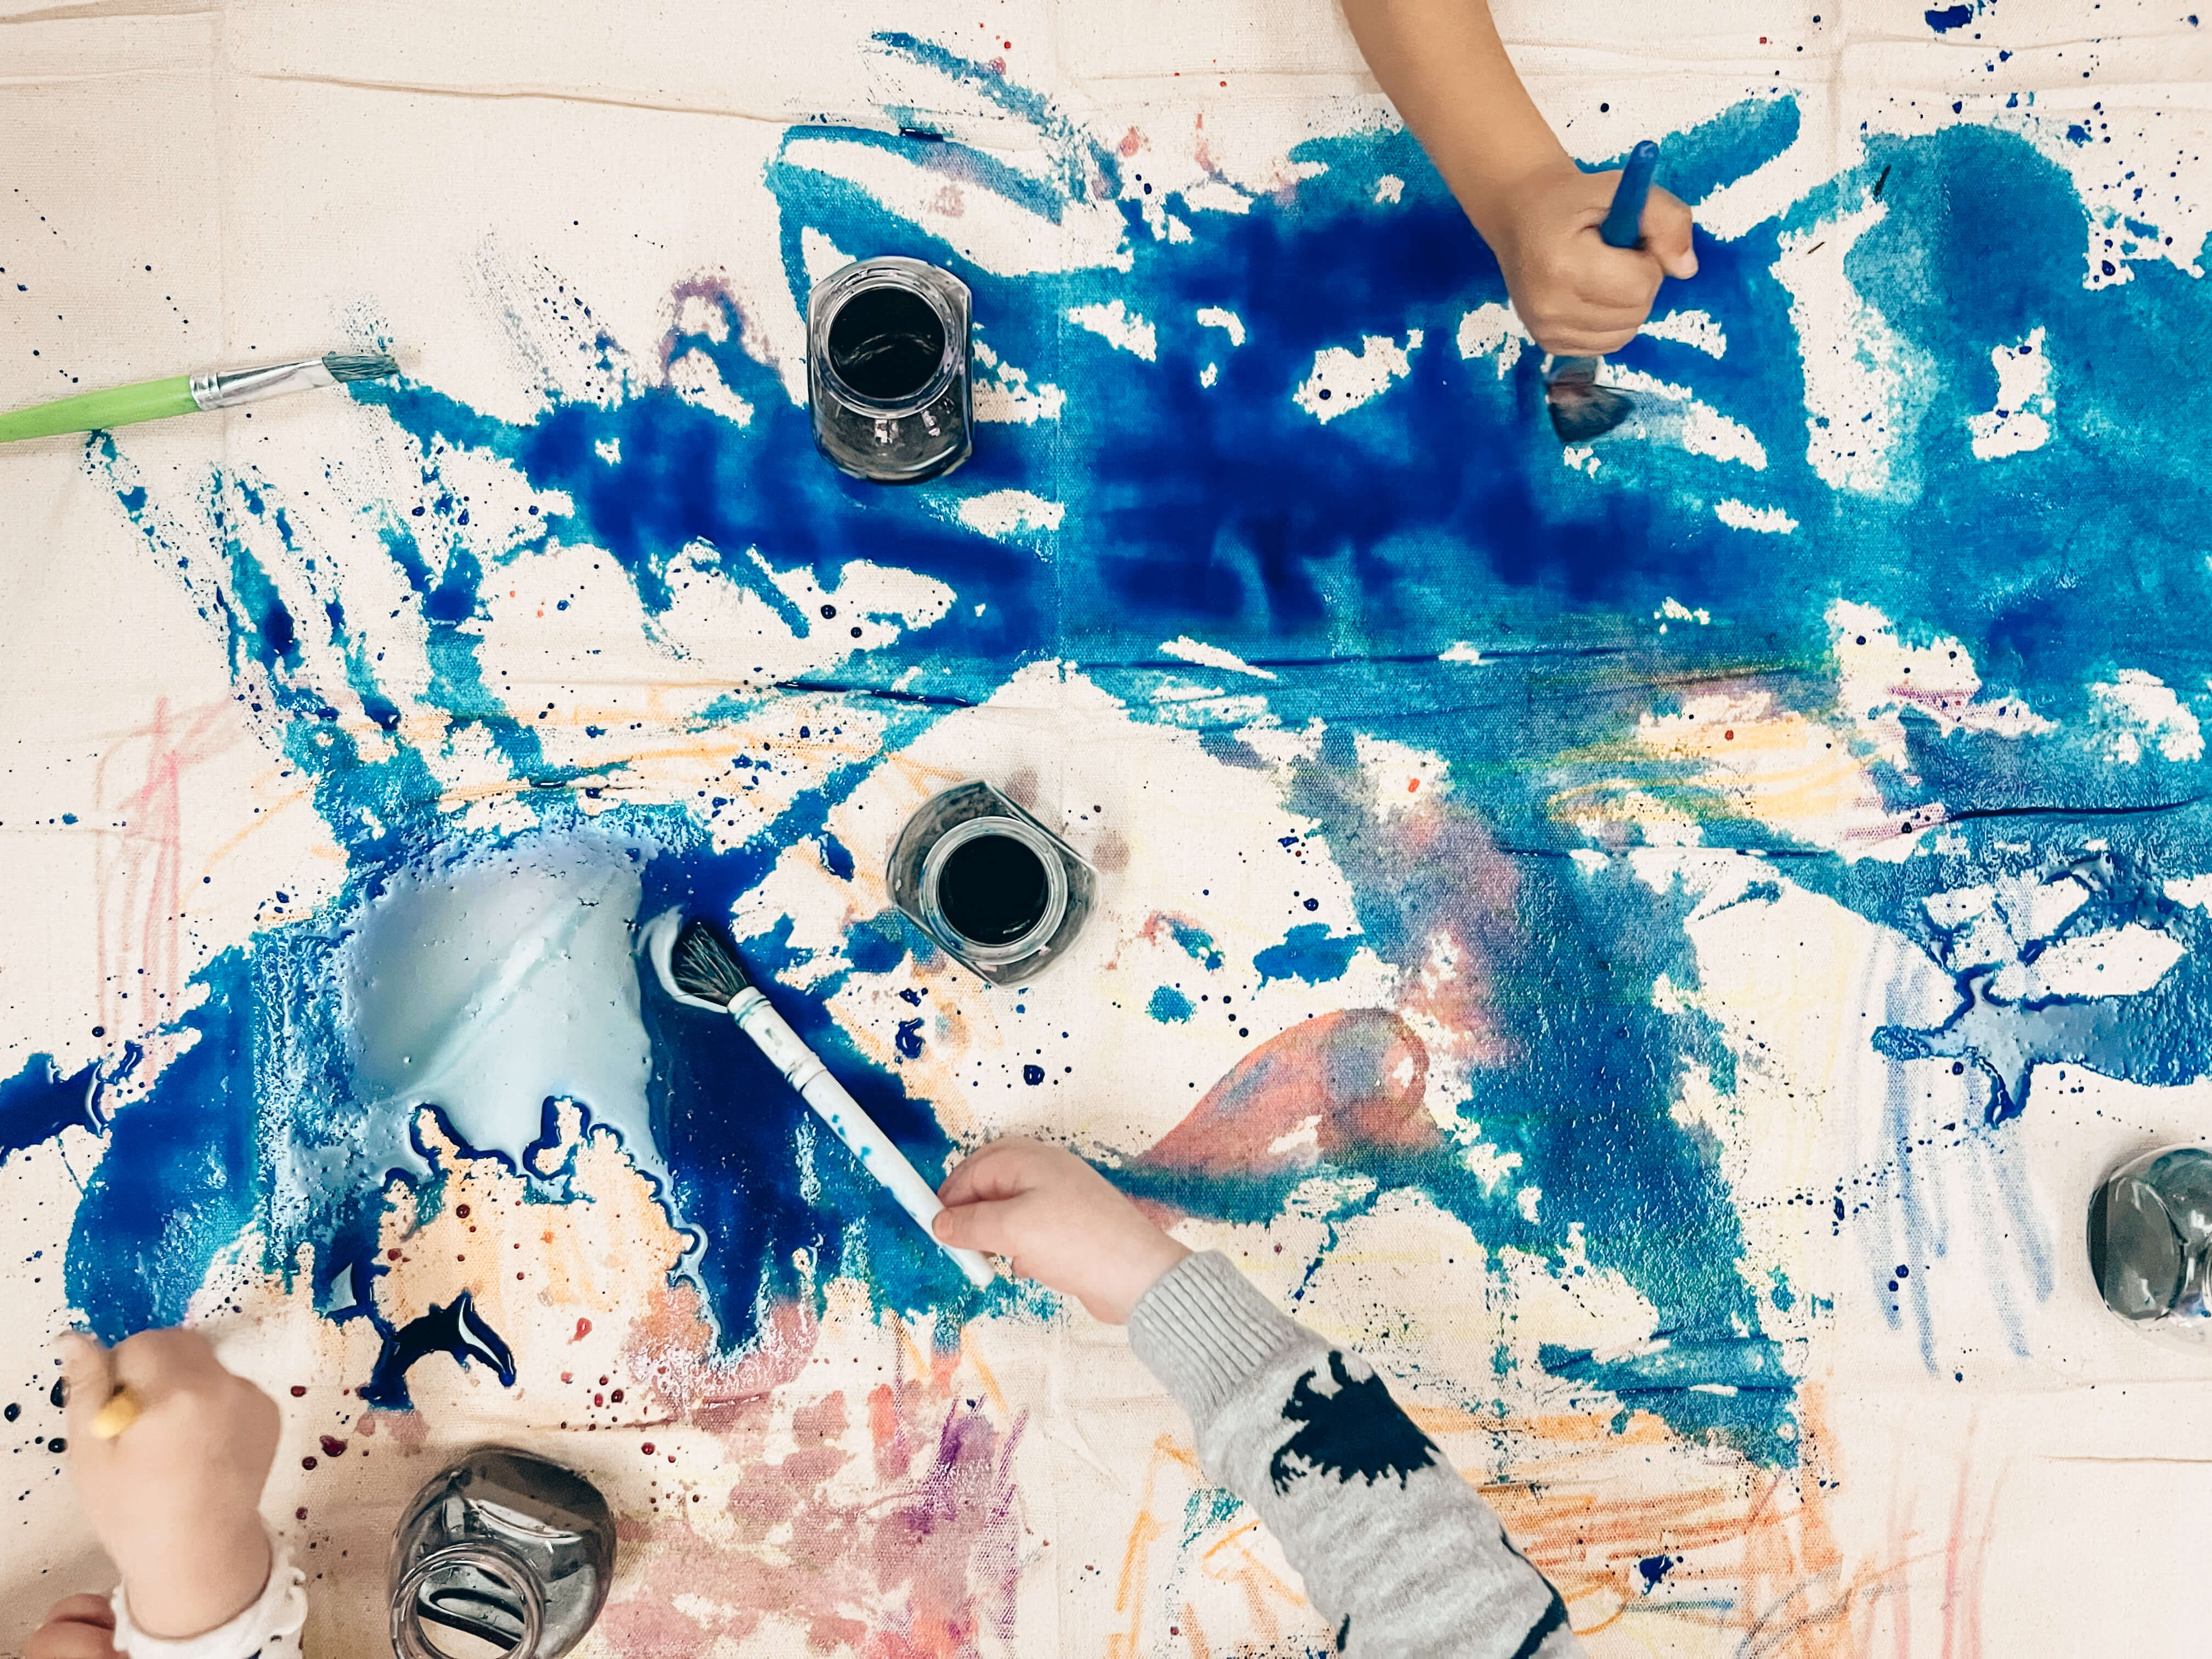 Children expressing themselves through art using paintbrushes